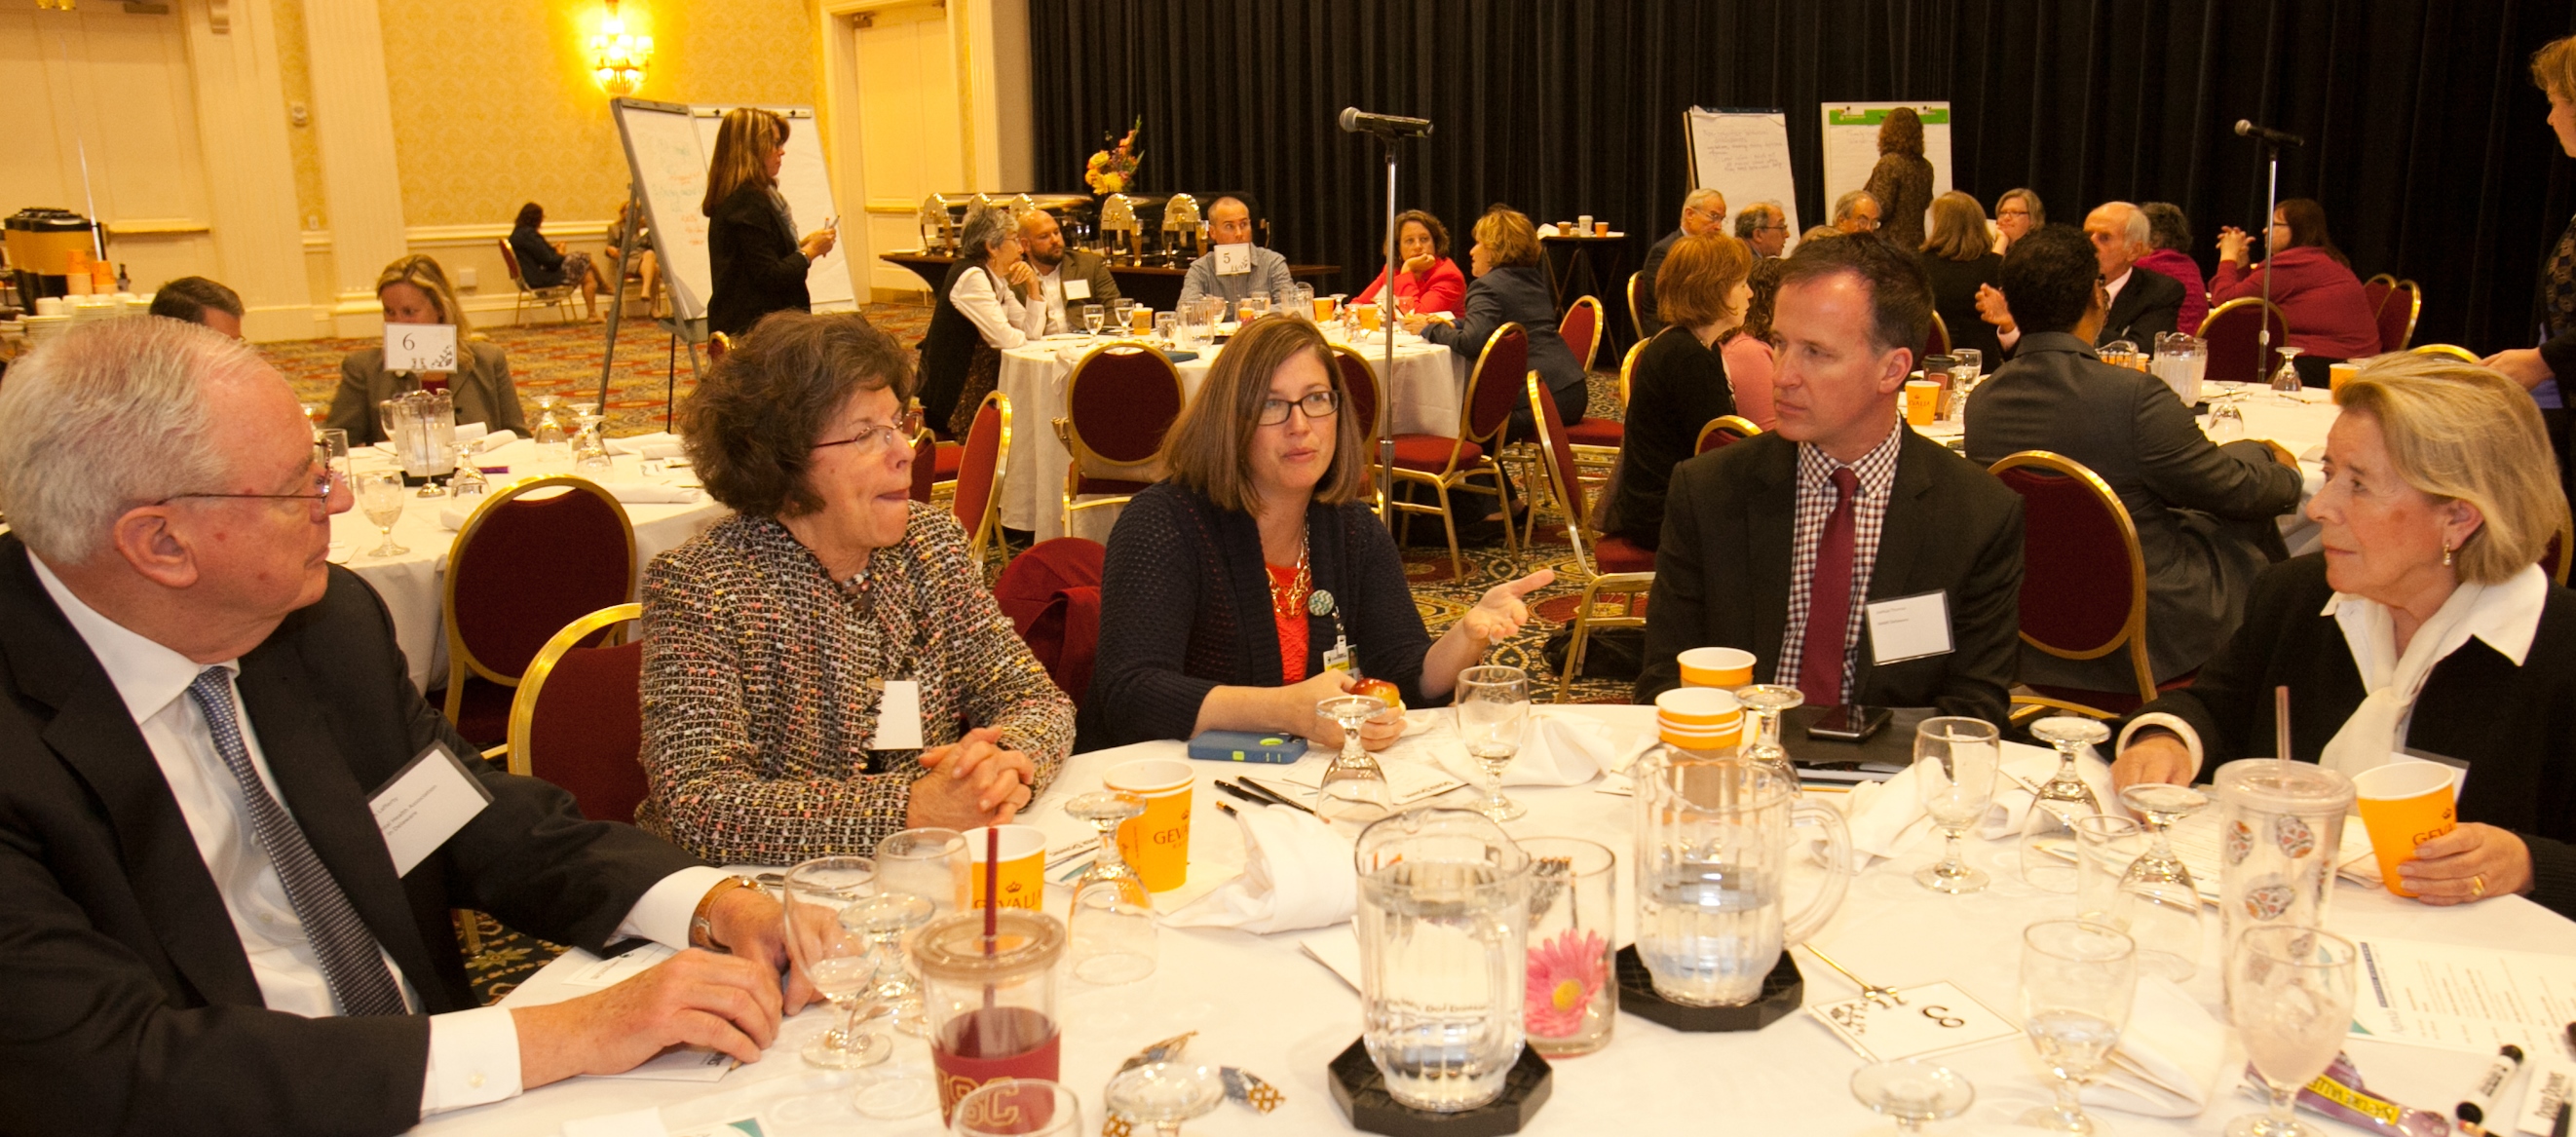 Behavioral Health Summit Explores Integration For A Healthier Delaware - Christianacare News